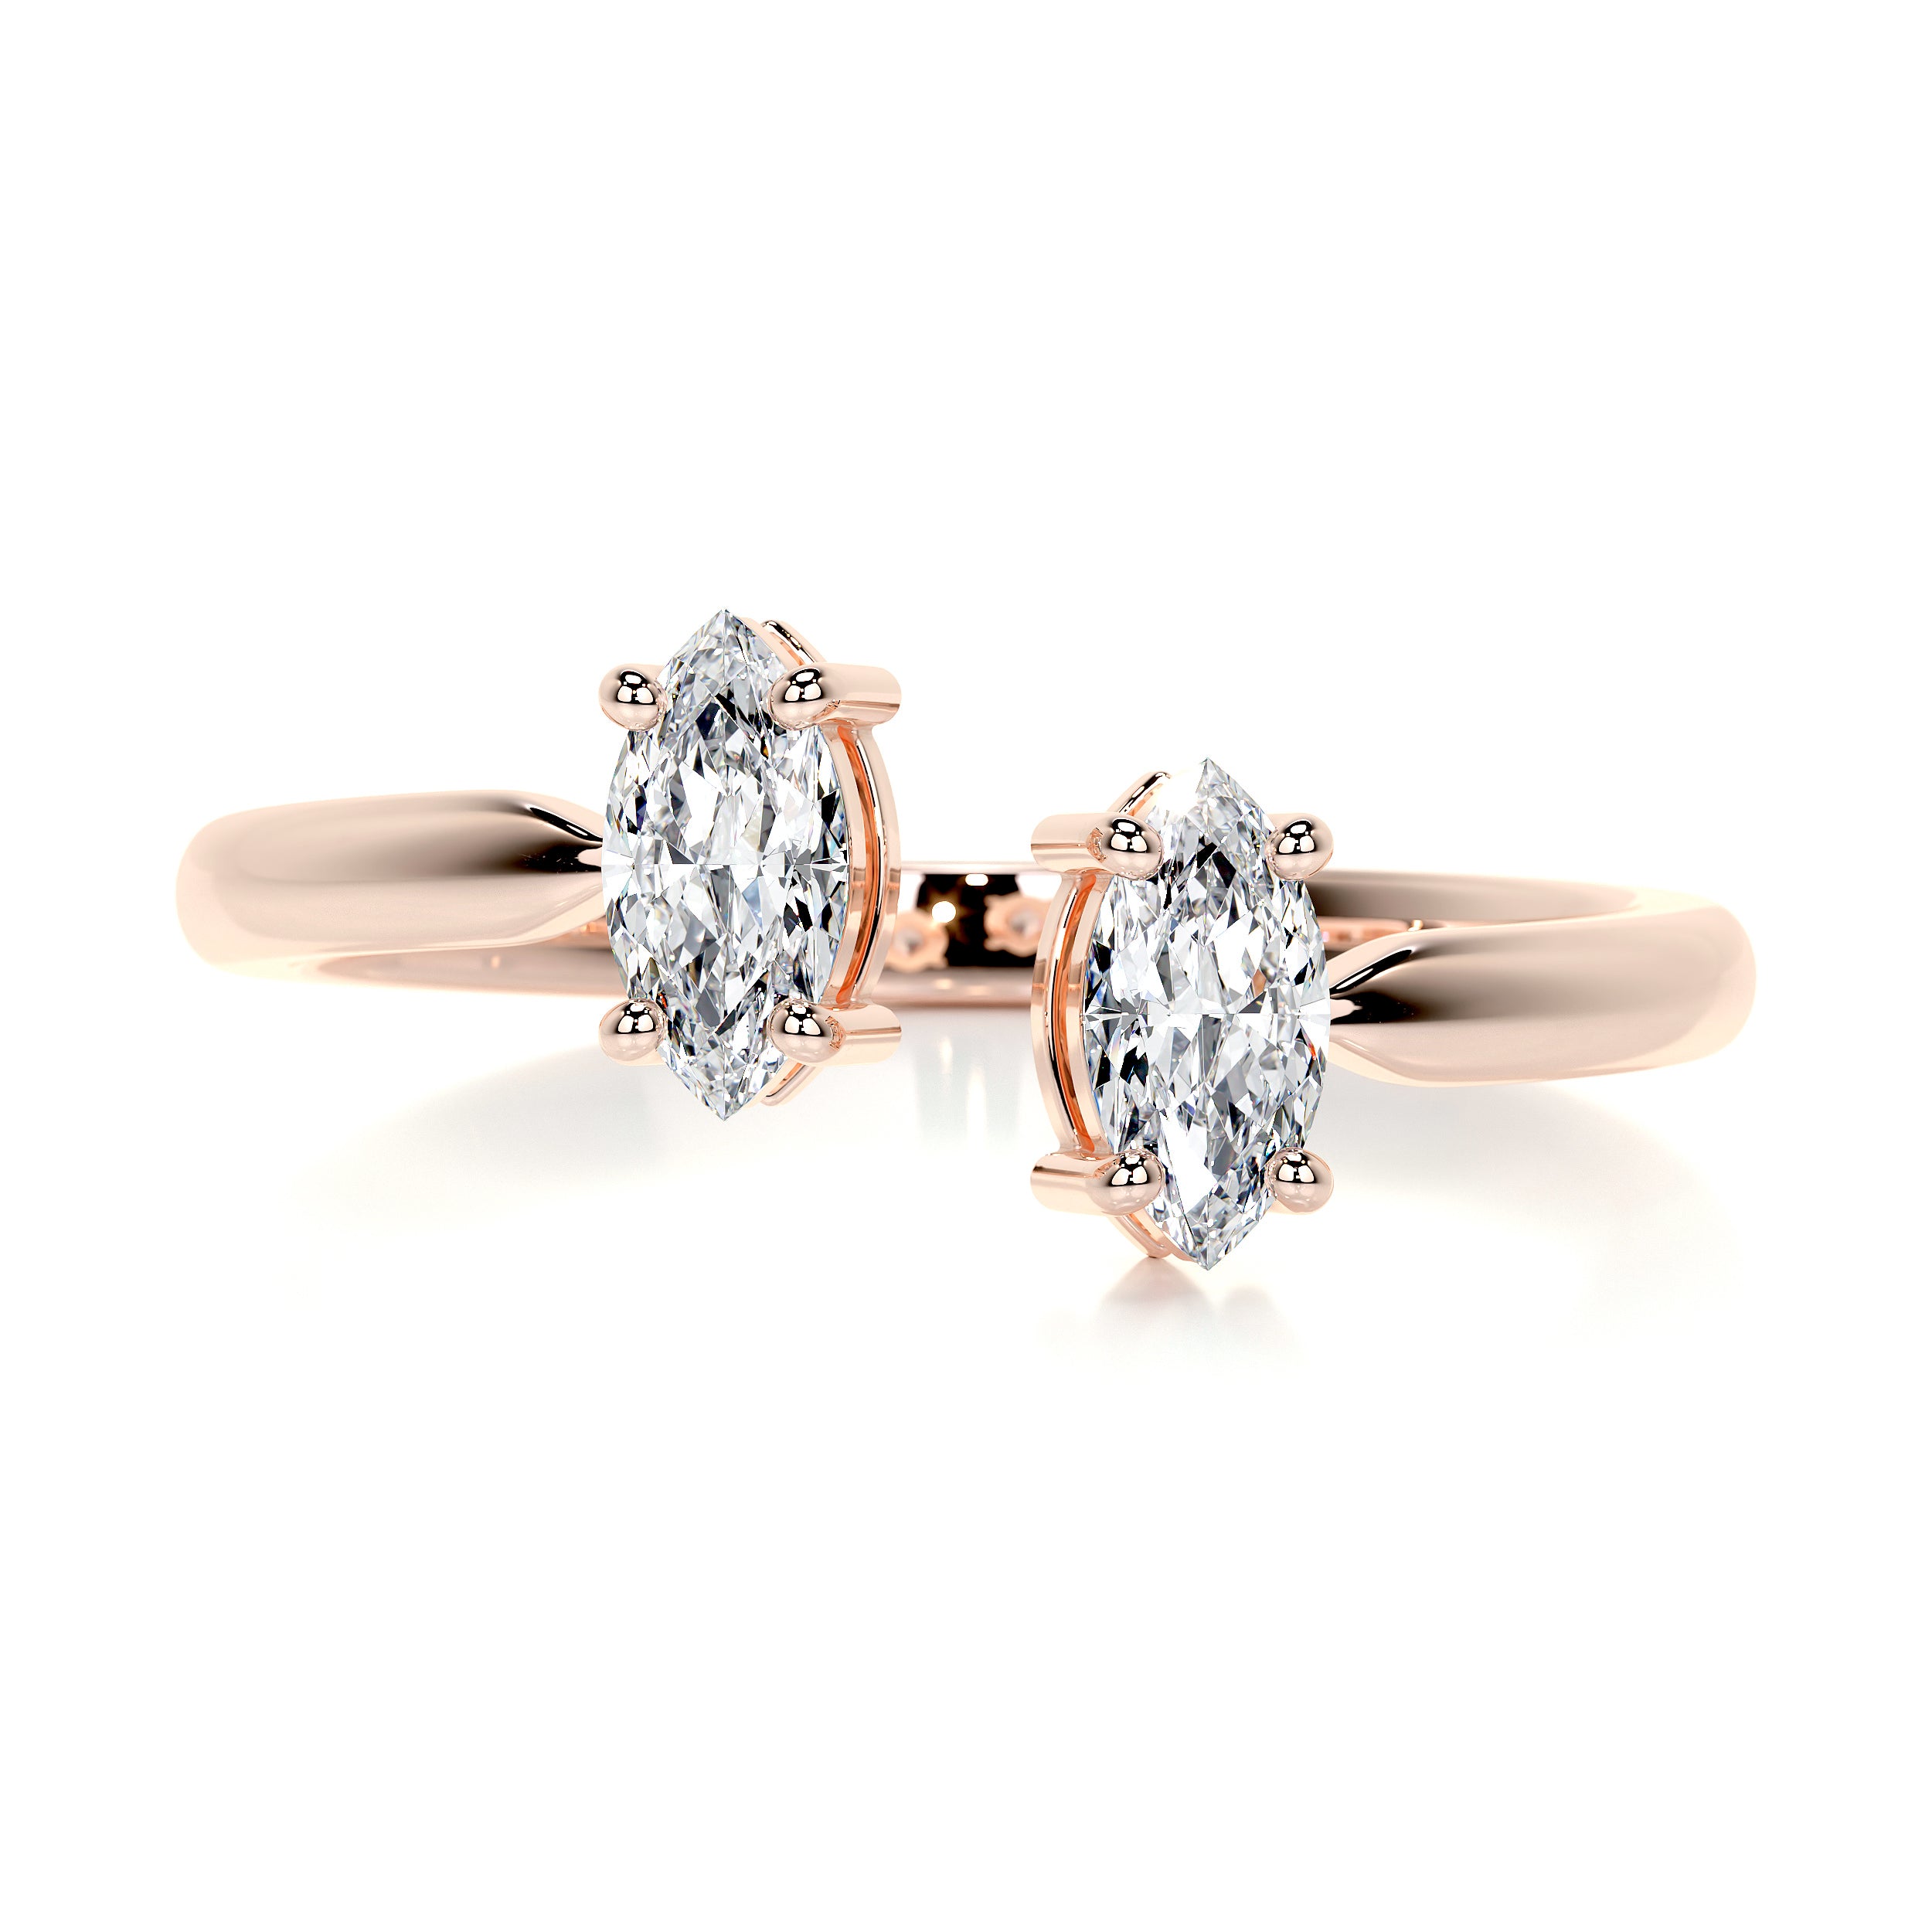 Celine Fashion Ring   (0.36 Carat) -14K Rose Gold